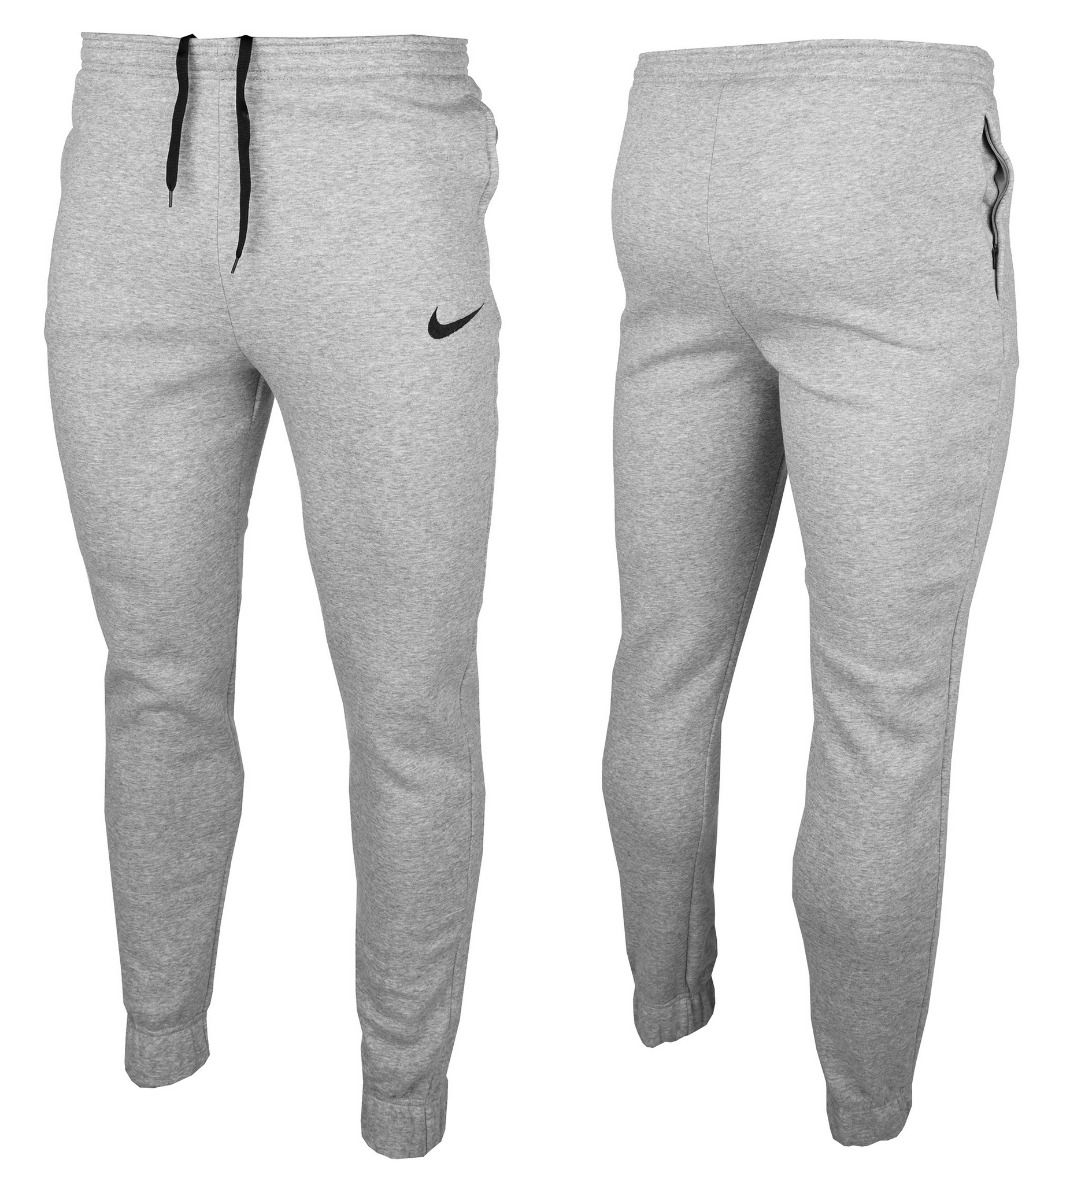 Nike spodnie męskie Park CW6907 063